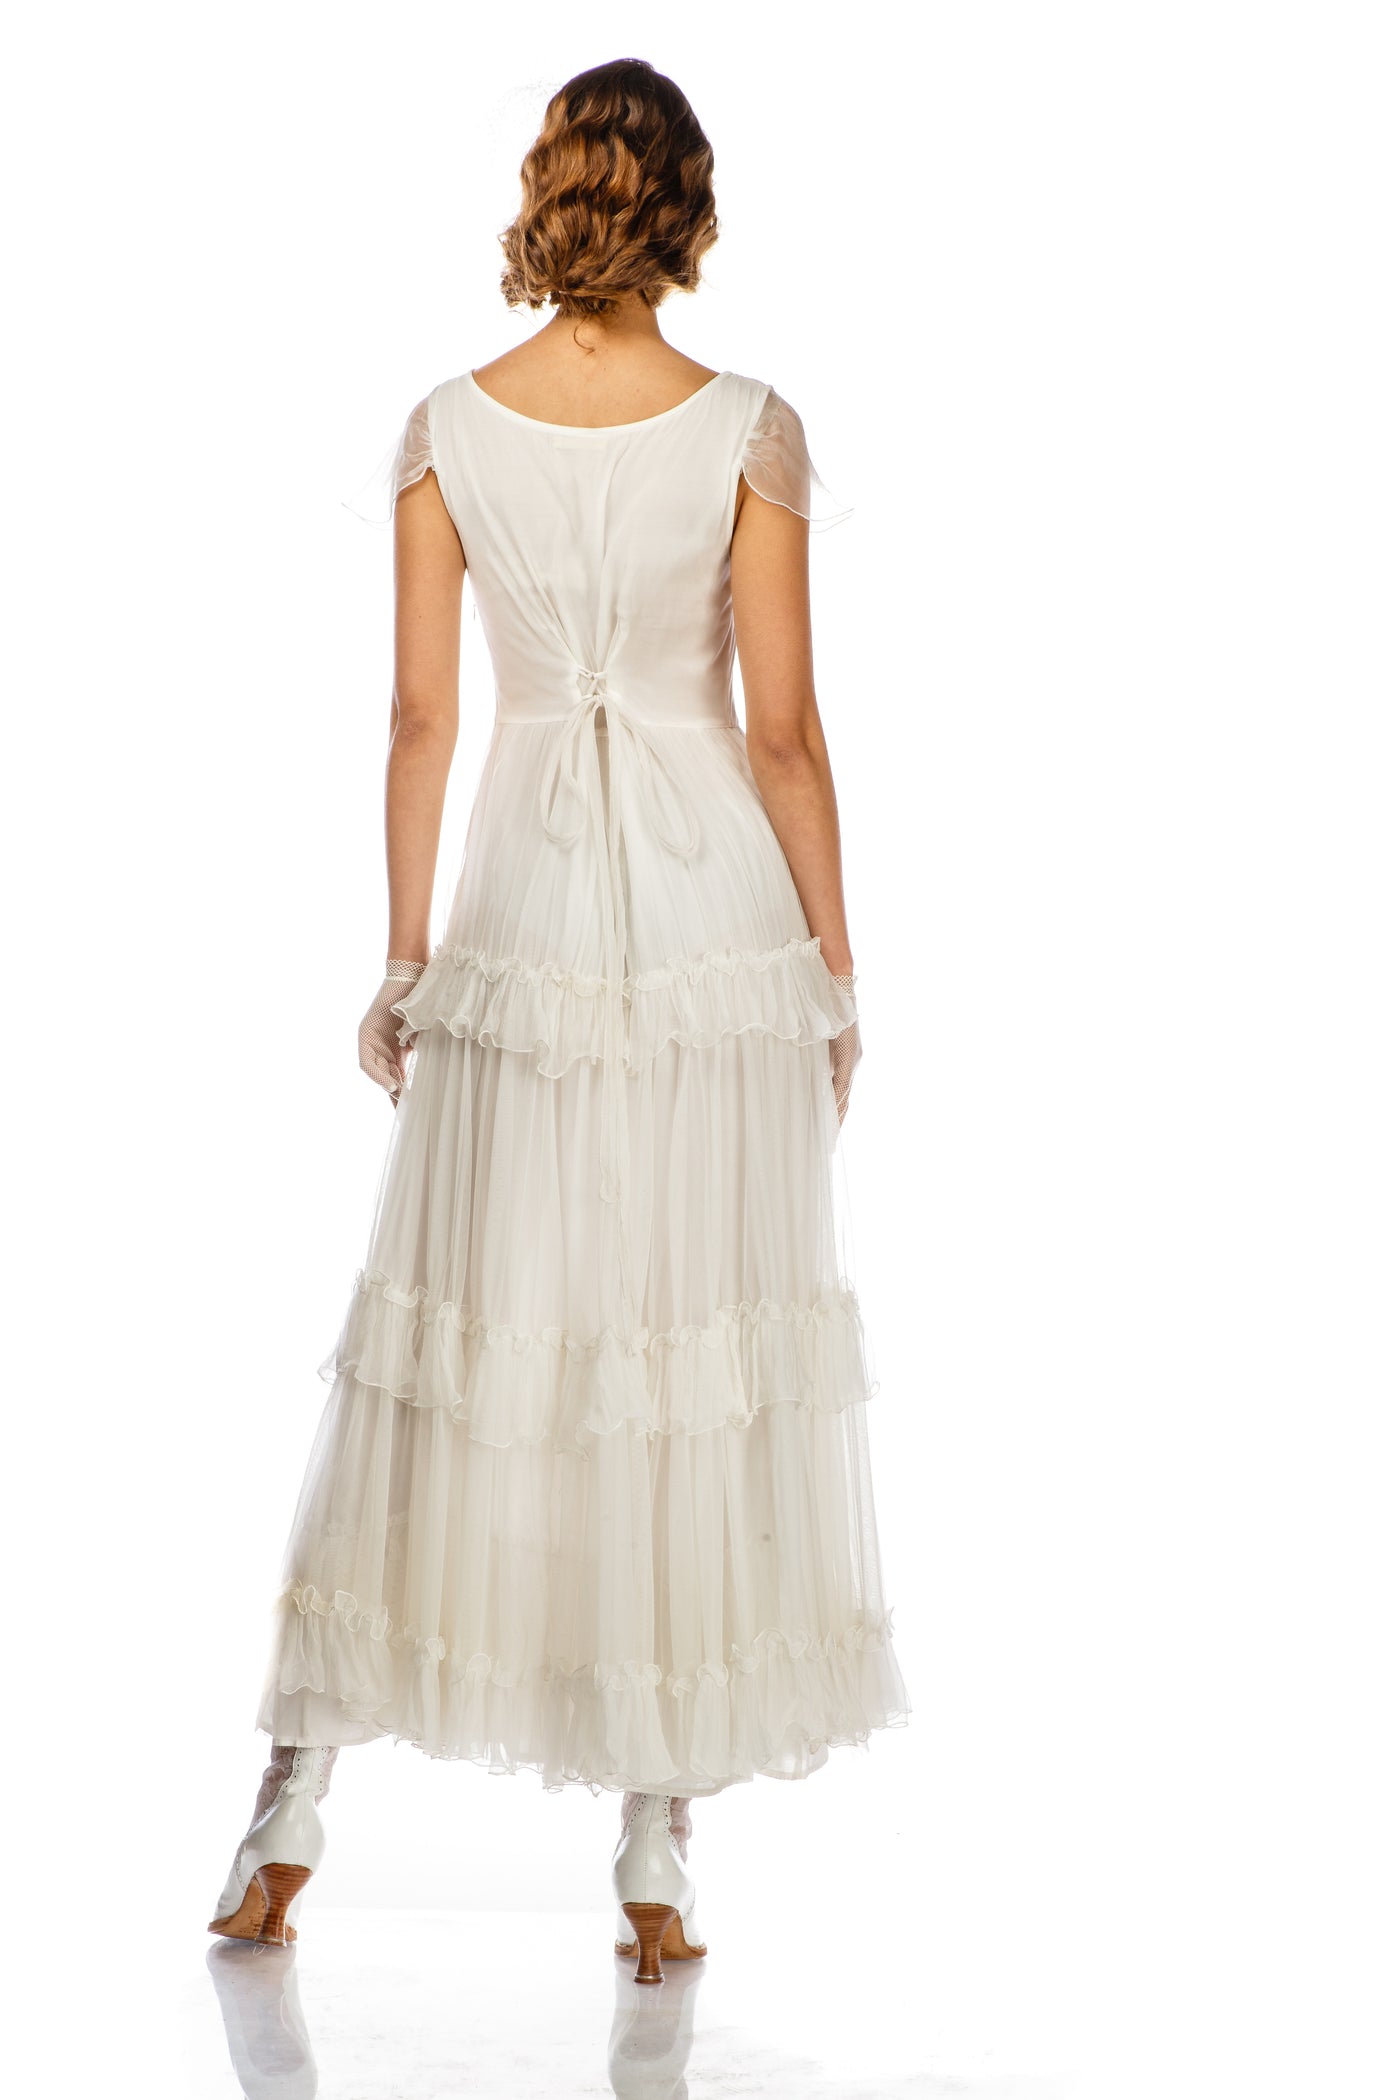 Harper Vintage Insprired Wedding Dress in Ivory by Nataya